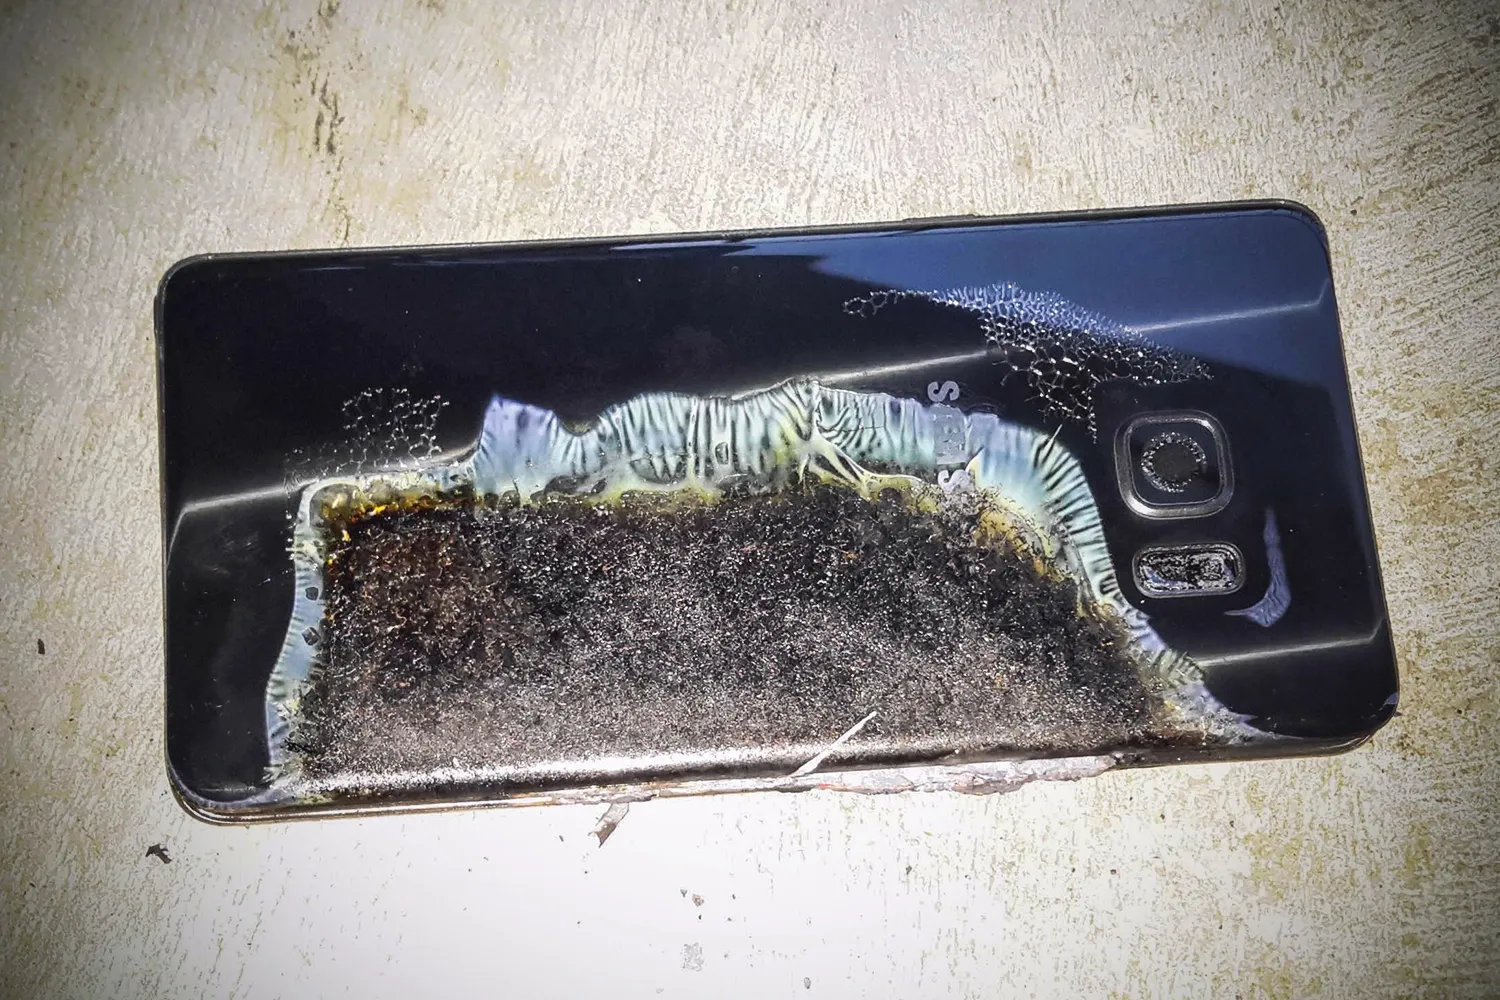 An exploded samsung phone